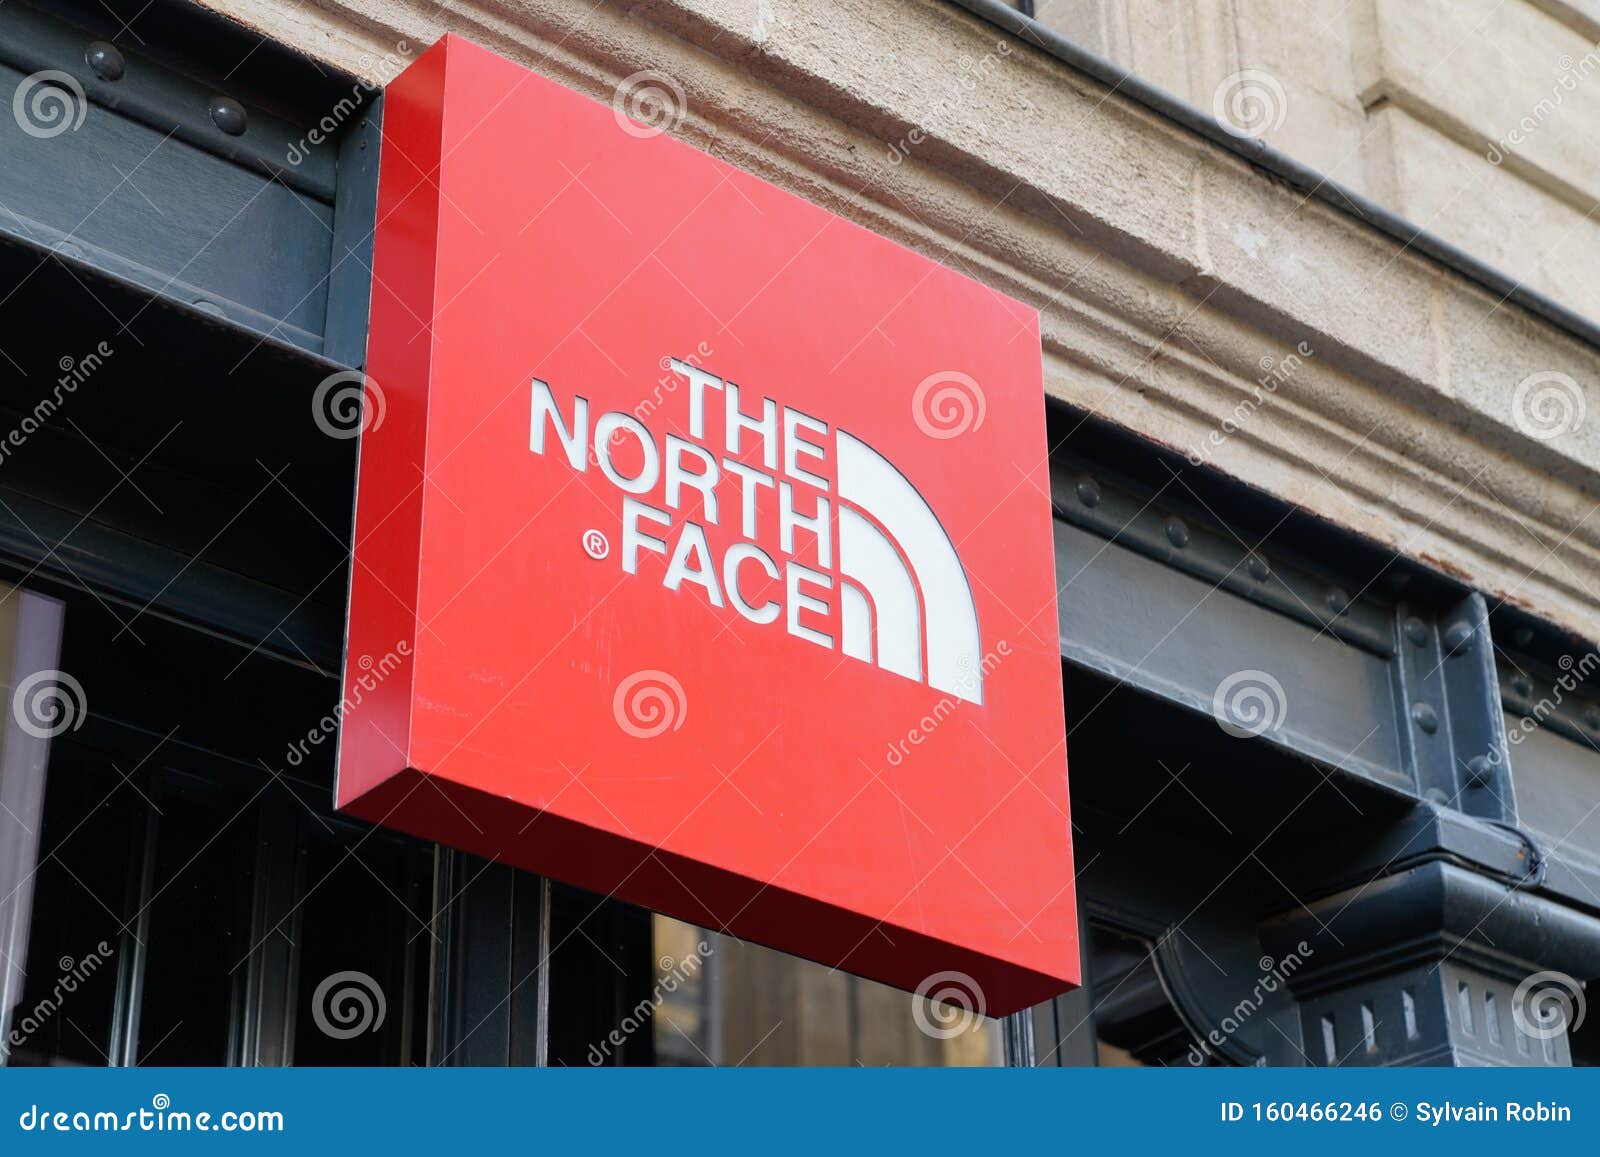 north face france online